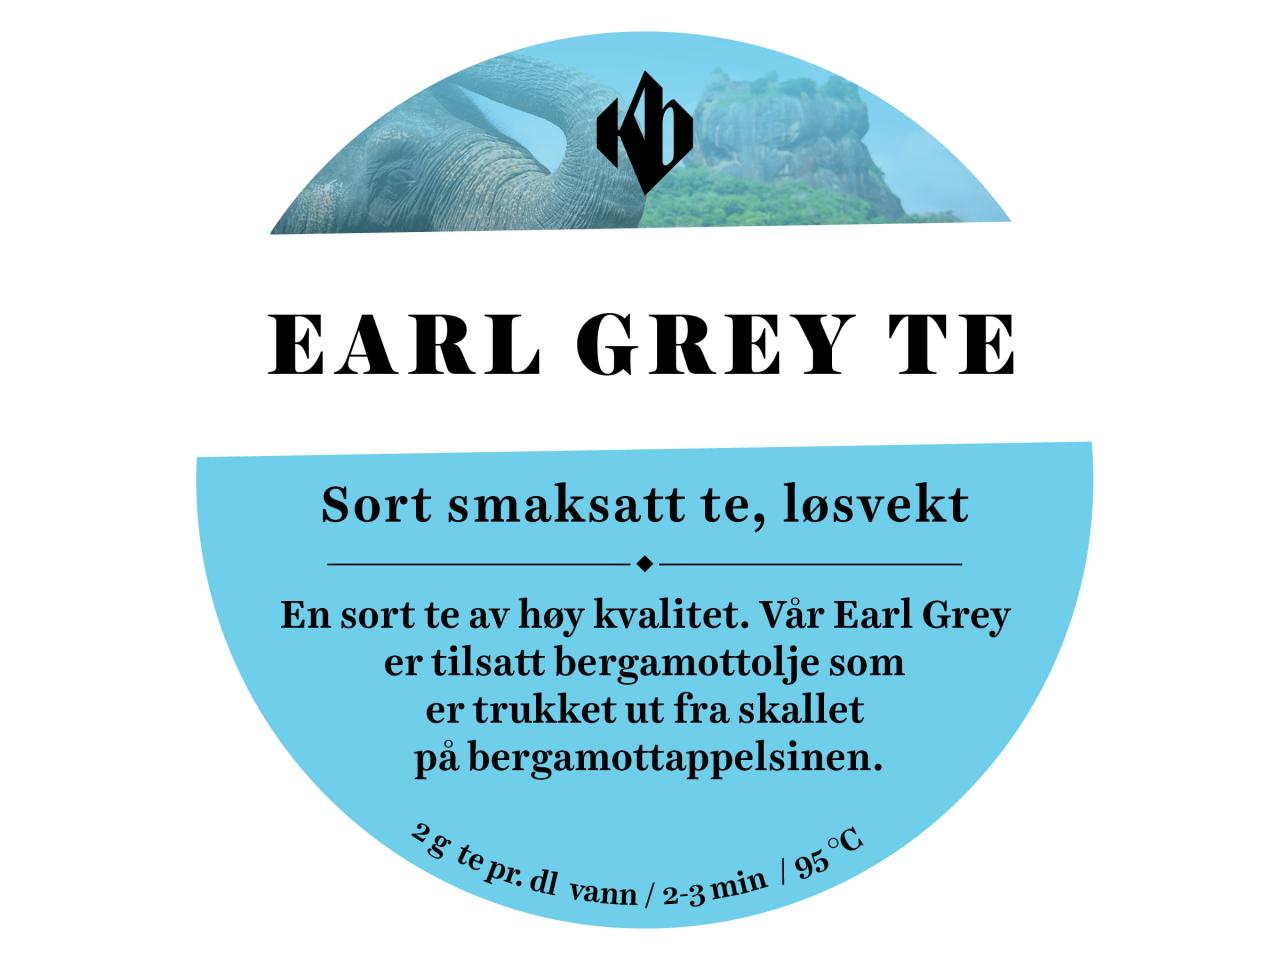 Earl Grey - løsvekt